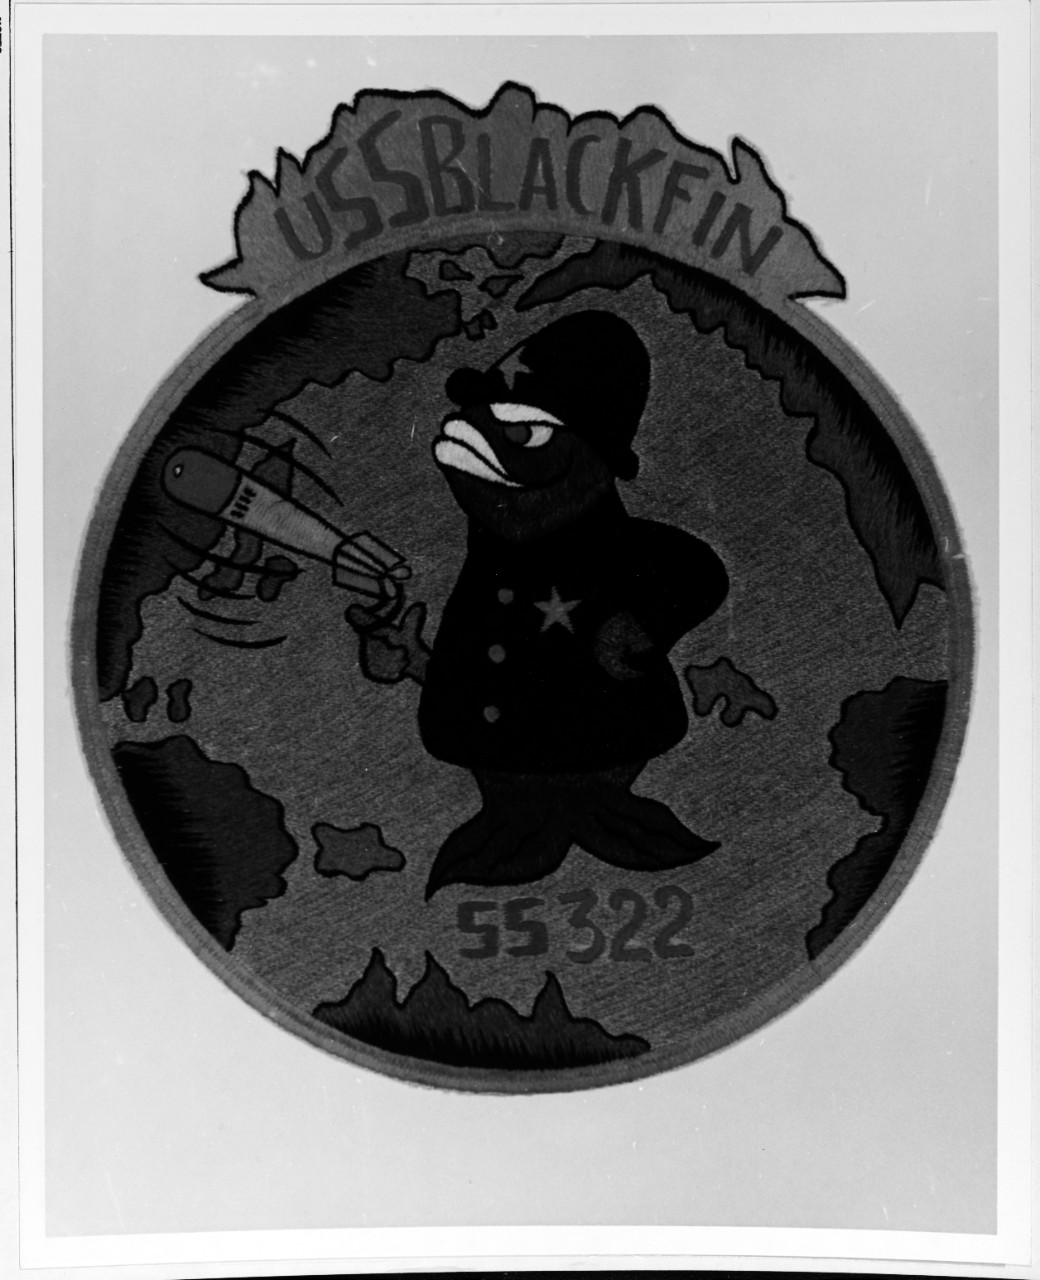 Insignia:  USS BLACKFIN (SS-322)